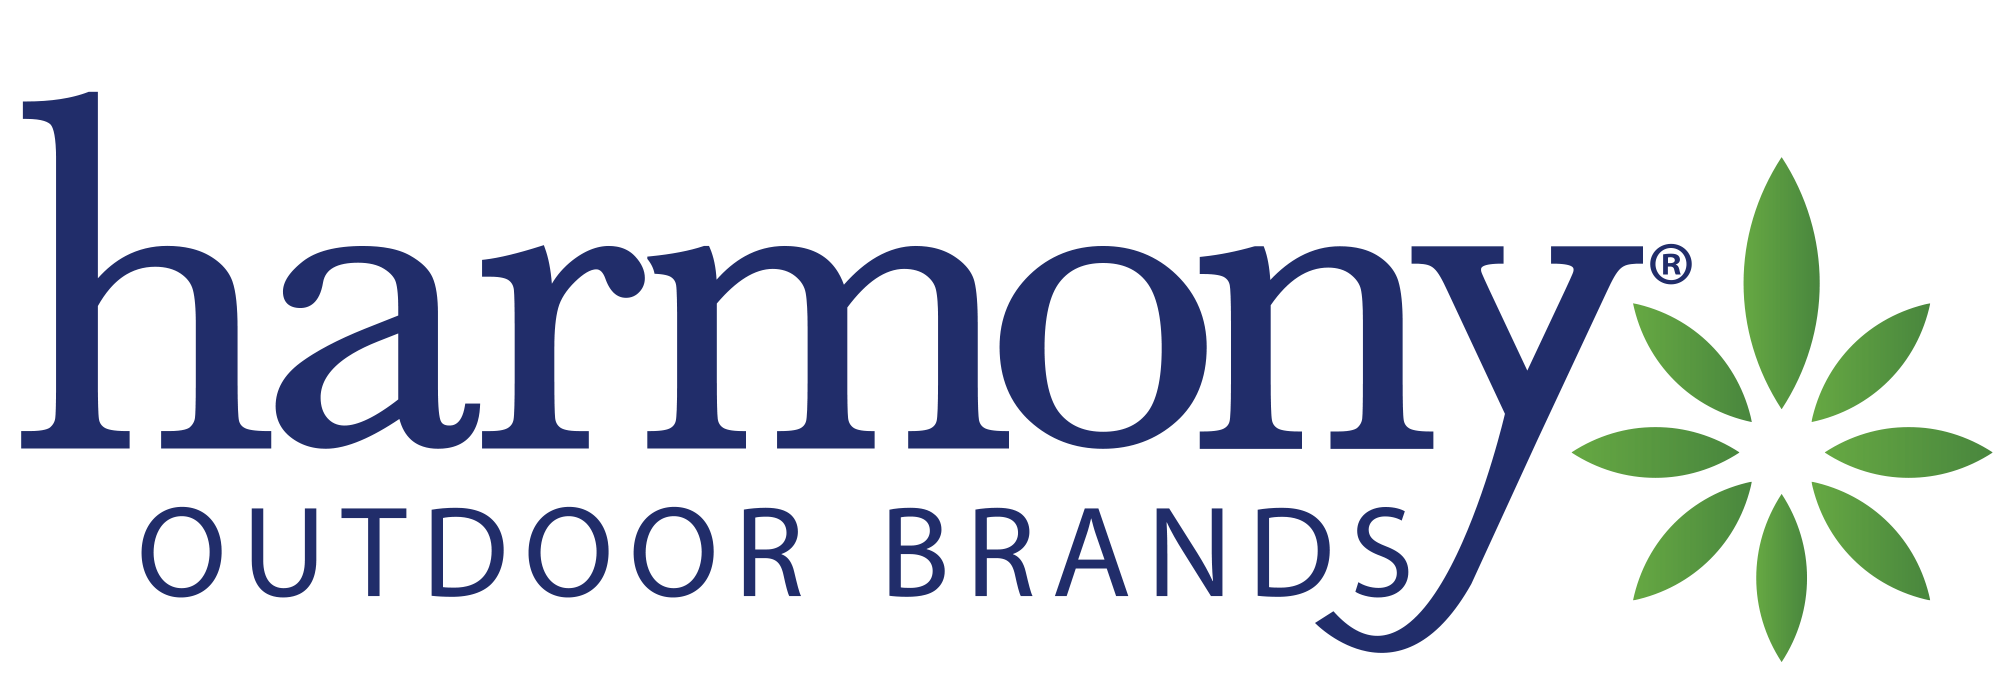 Harmony Brands Landing Page